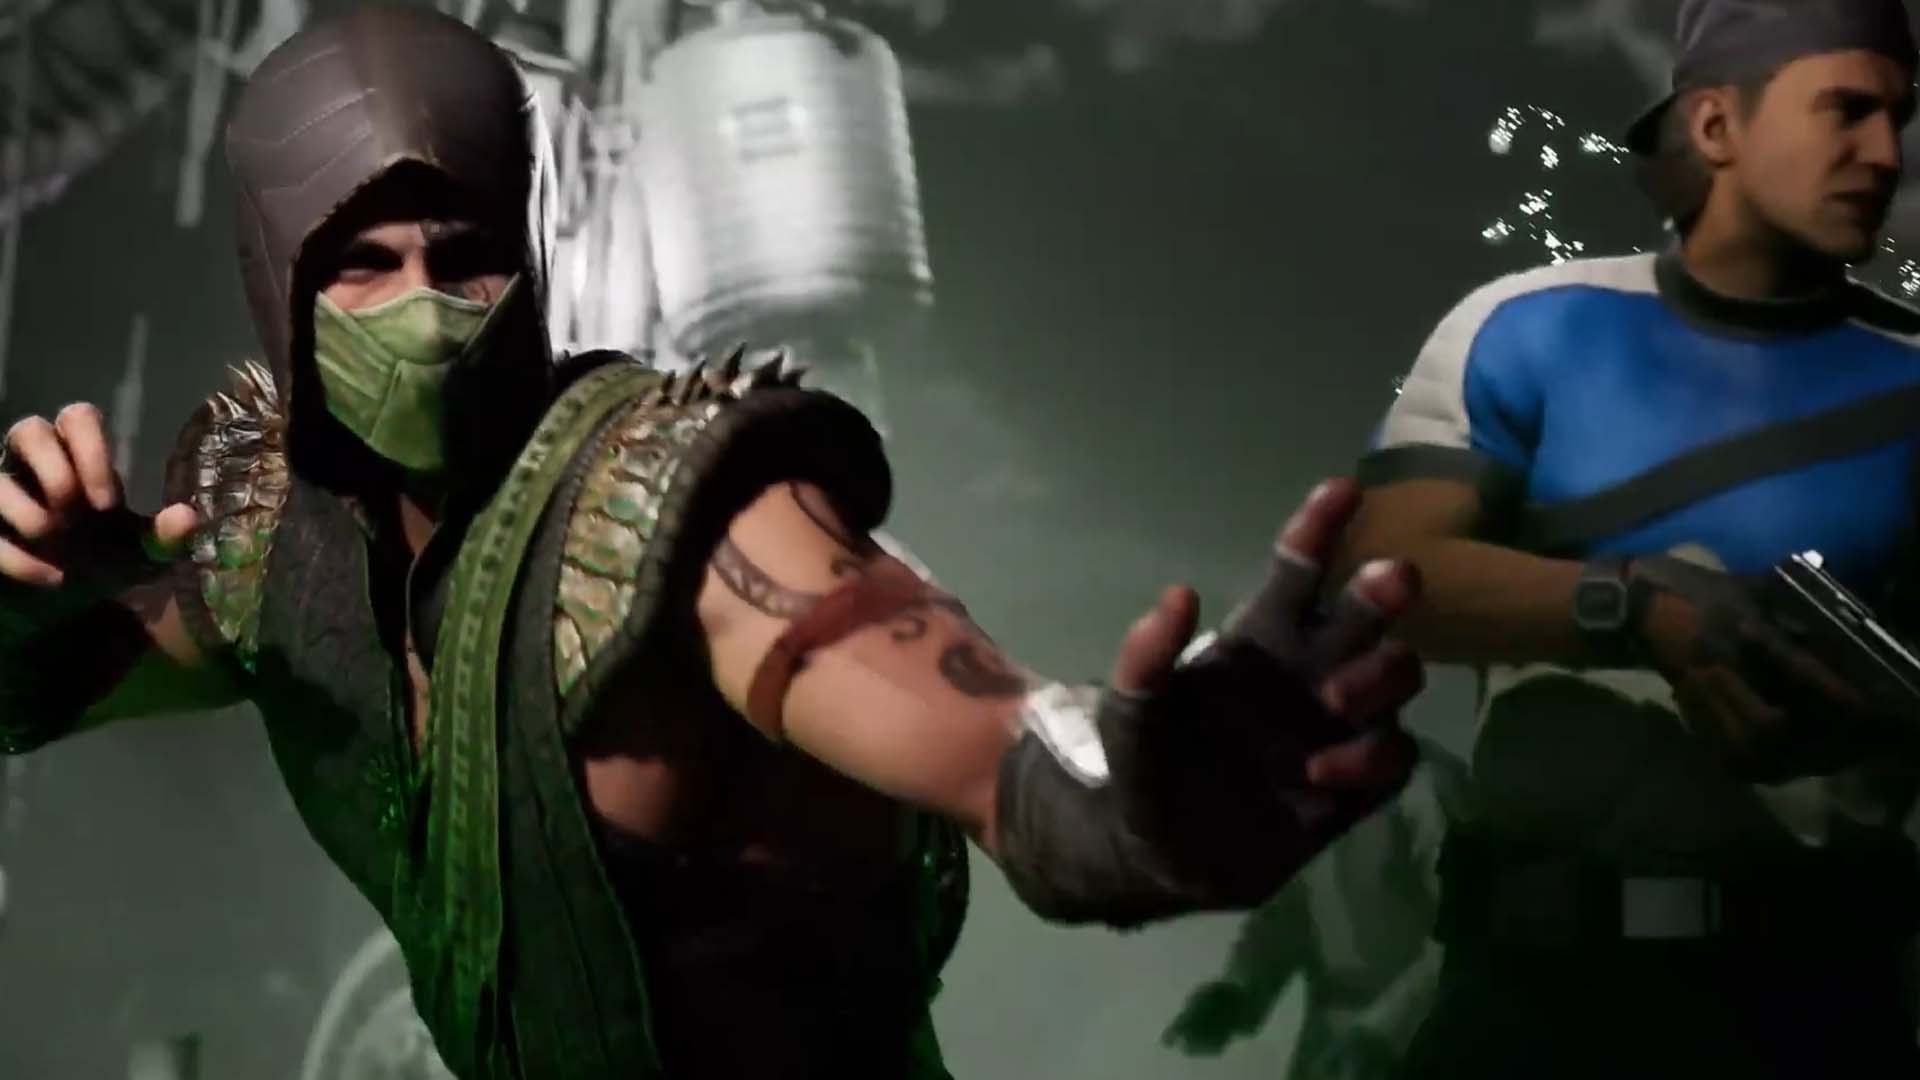 Video: Mortal Kombat 1 Kombat Pack roster reveal trailer - My Nintendo News